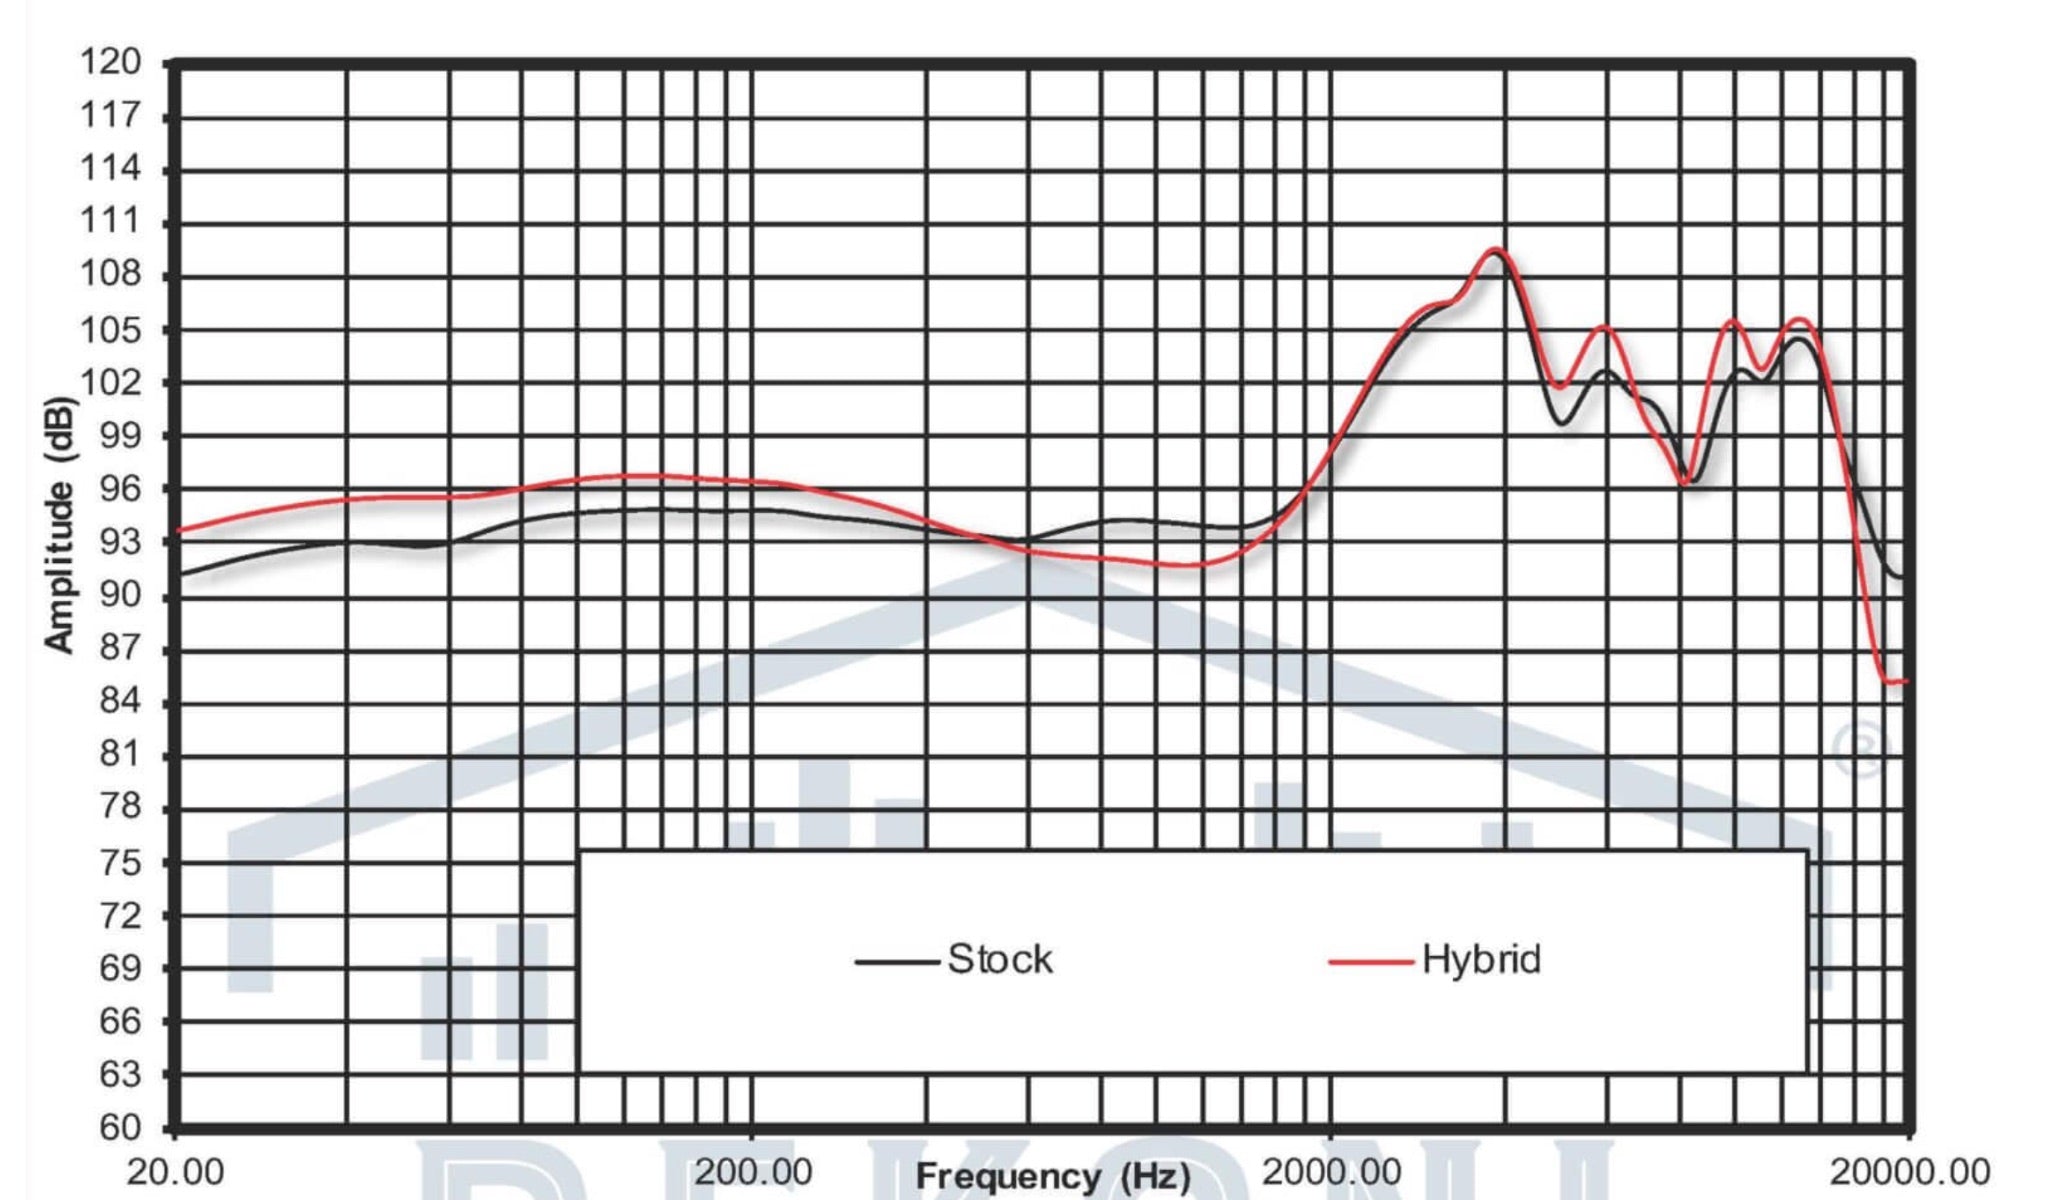 Dekoni Meze 109 Pro elite hybrid frequency response comparison graph